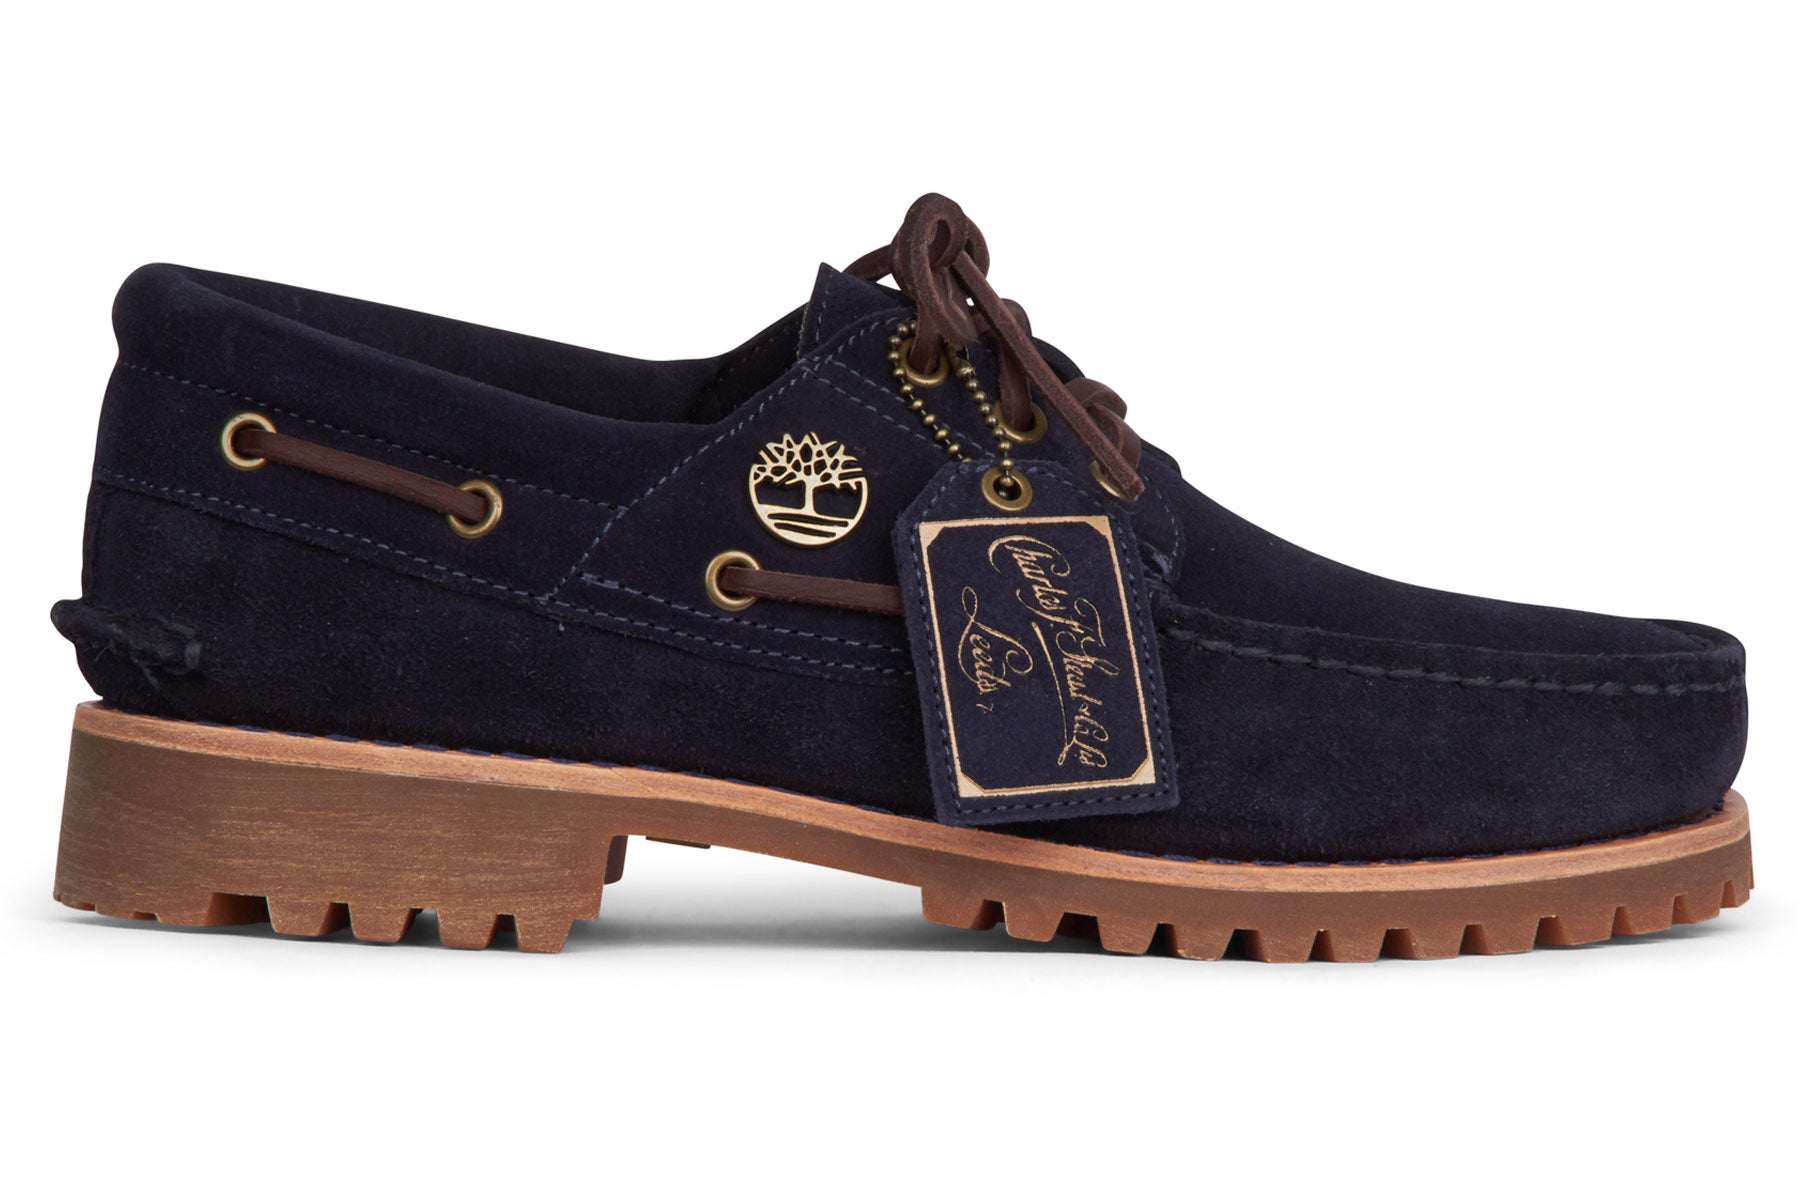 Timberland Authentics Lace Up Boat Shoe - Dark Blue